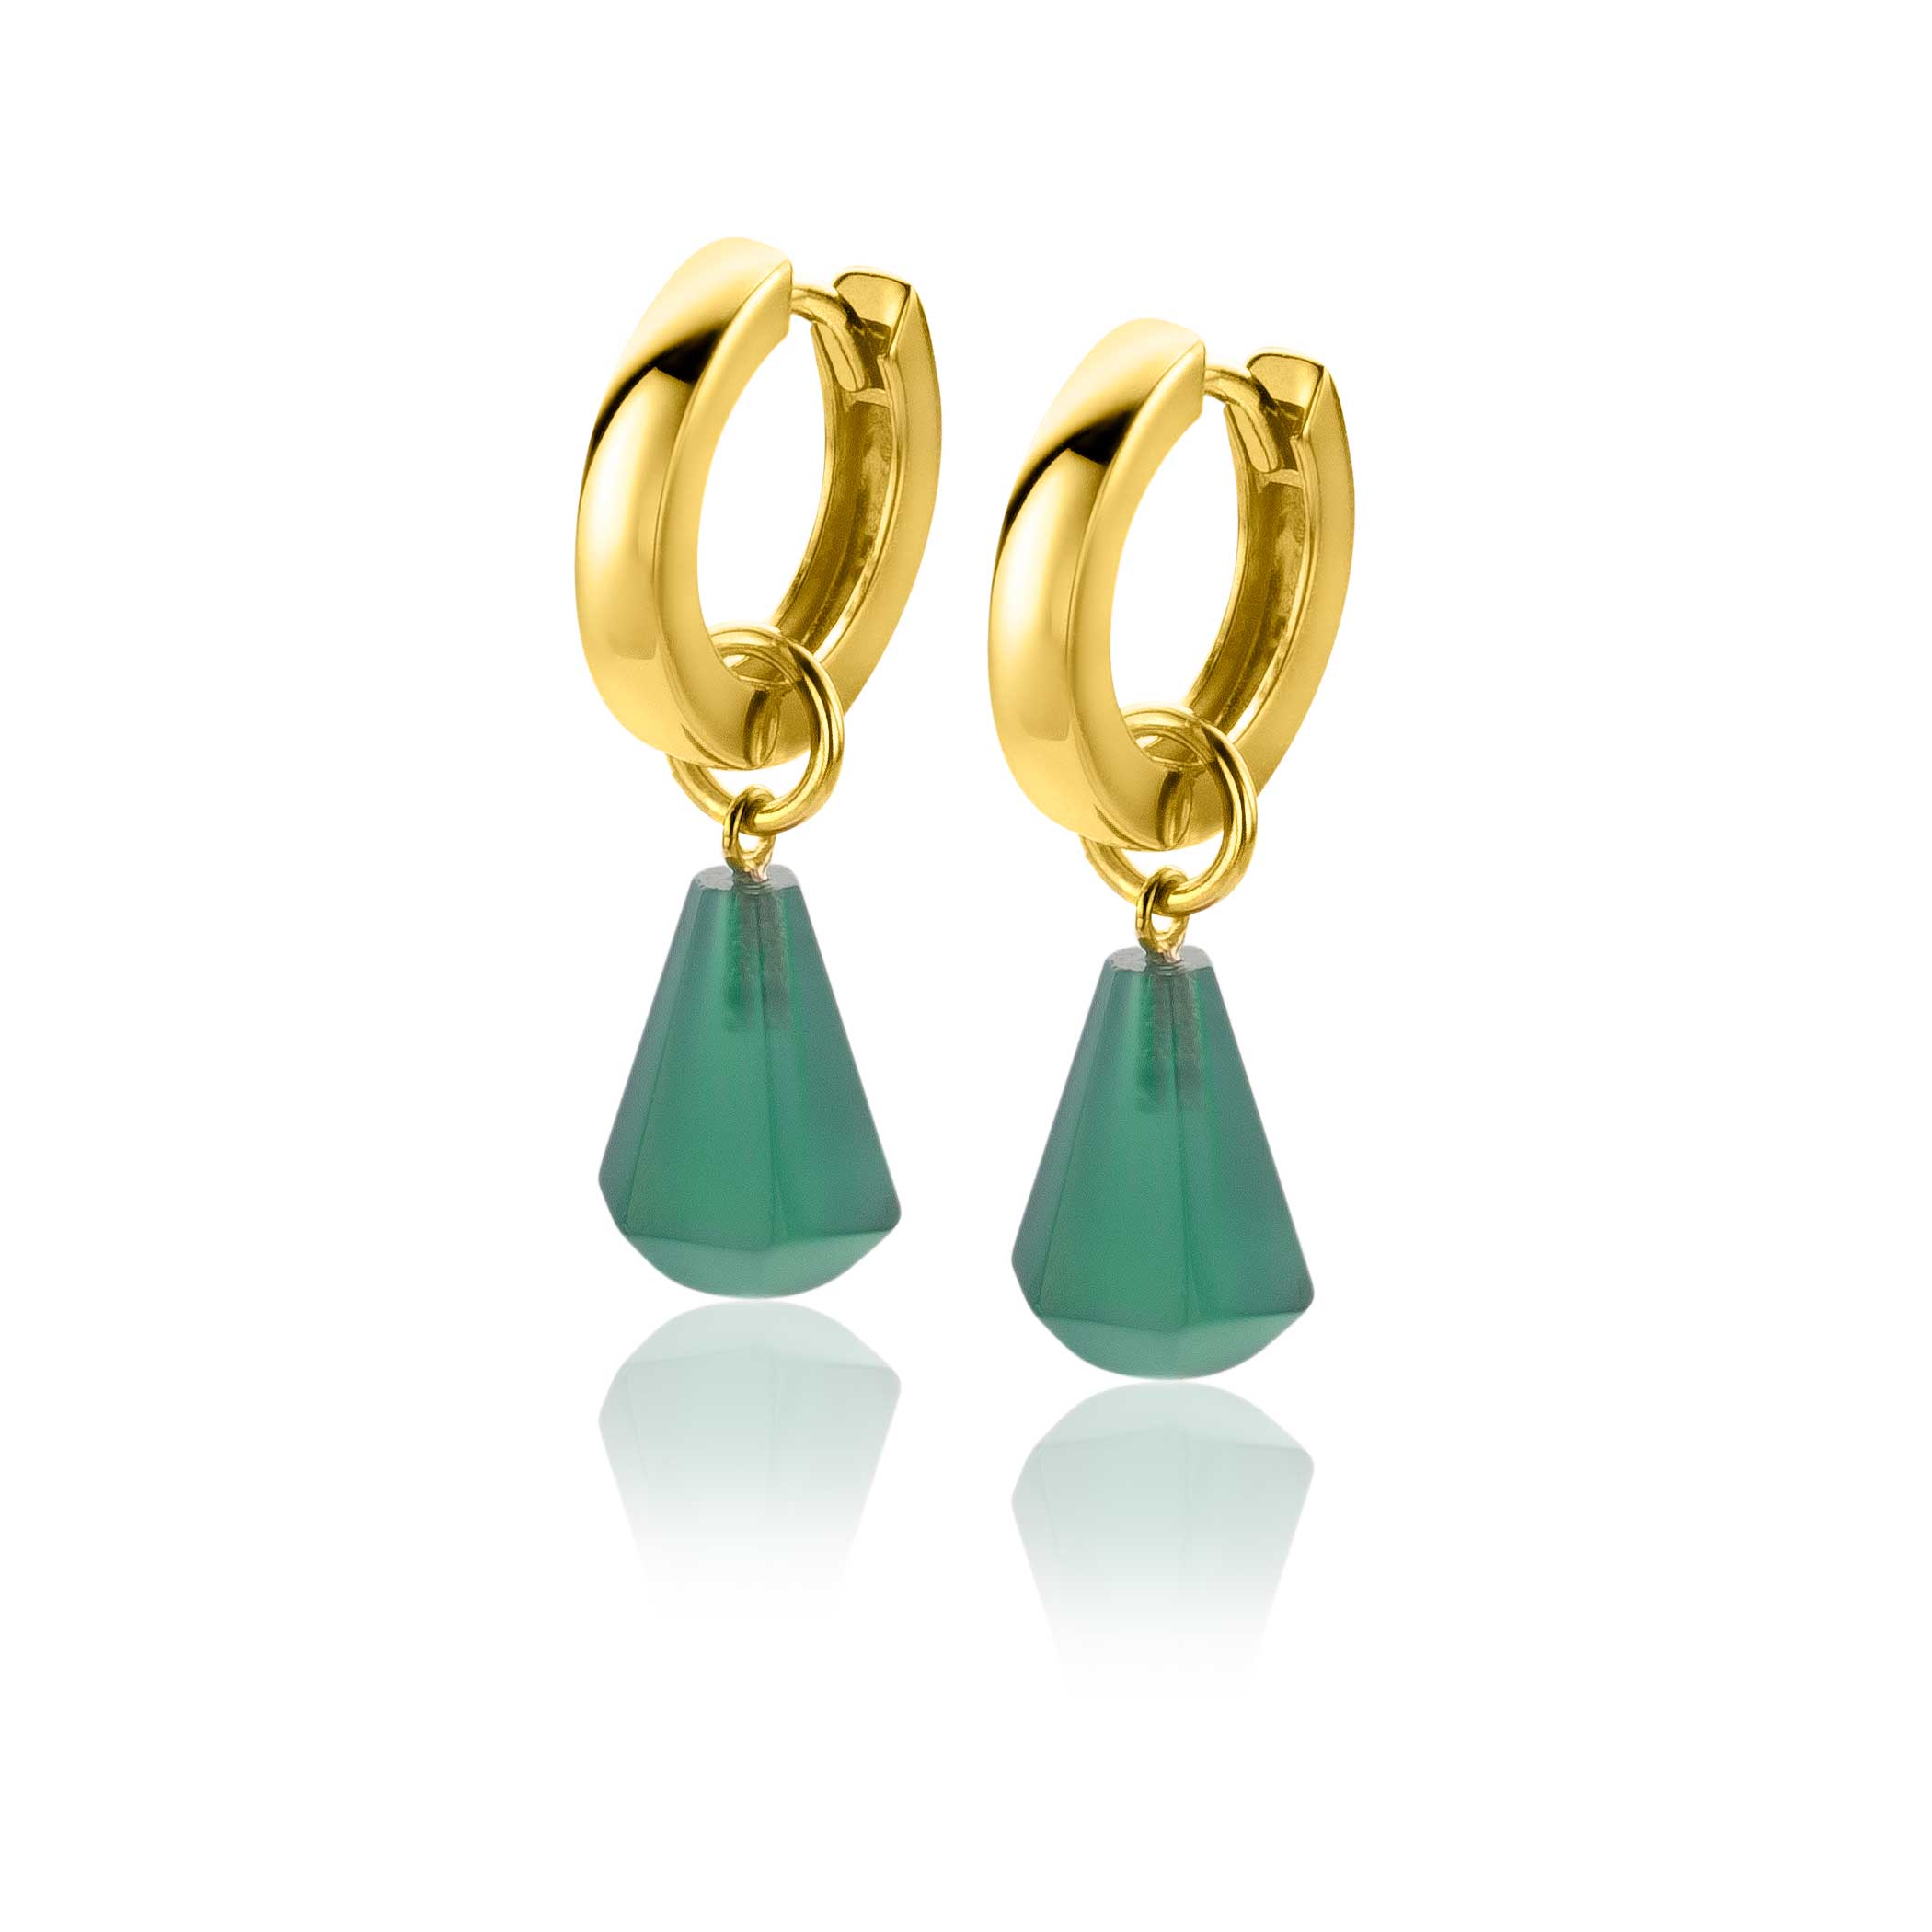 19mm ZINZI Gold Plated Sterling Silver Earrings Pendants Cone in Green Agate ZICH2256G (excl. hoop earrings)